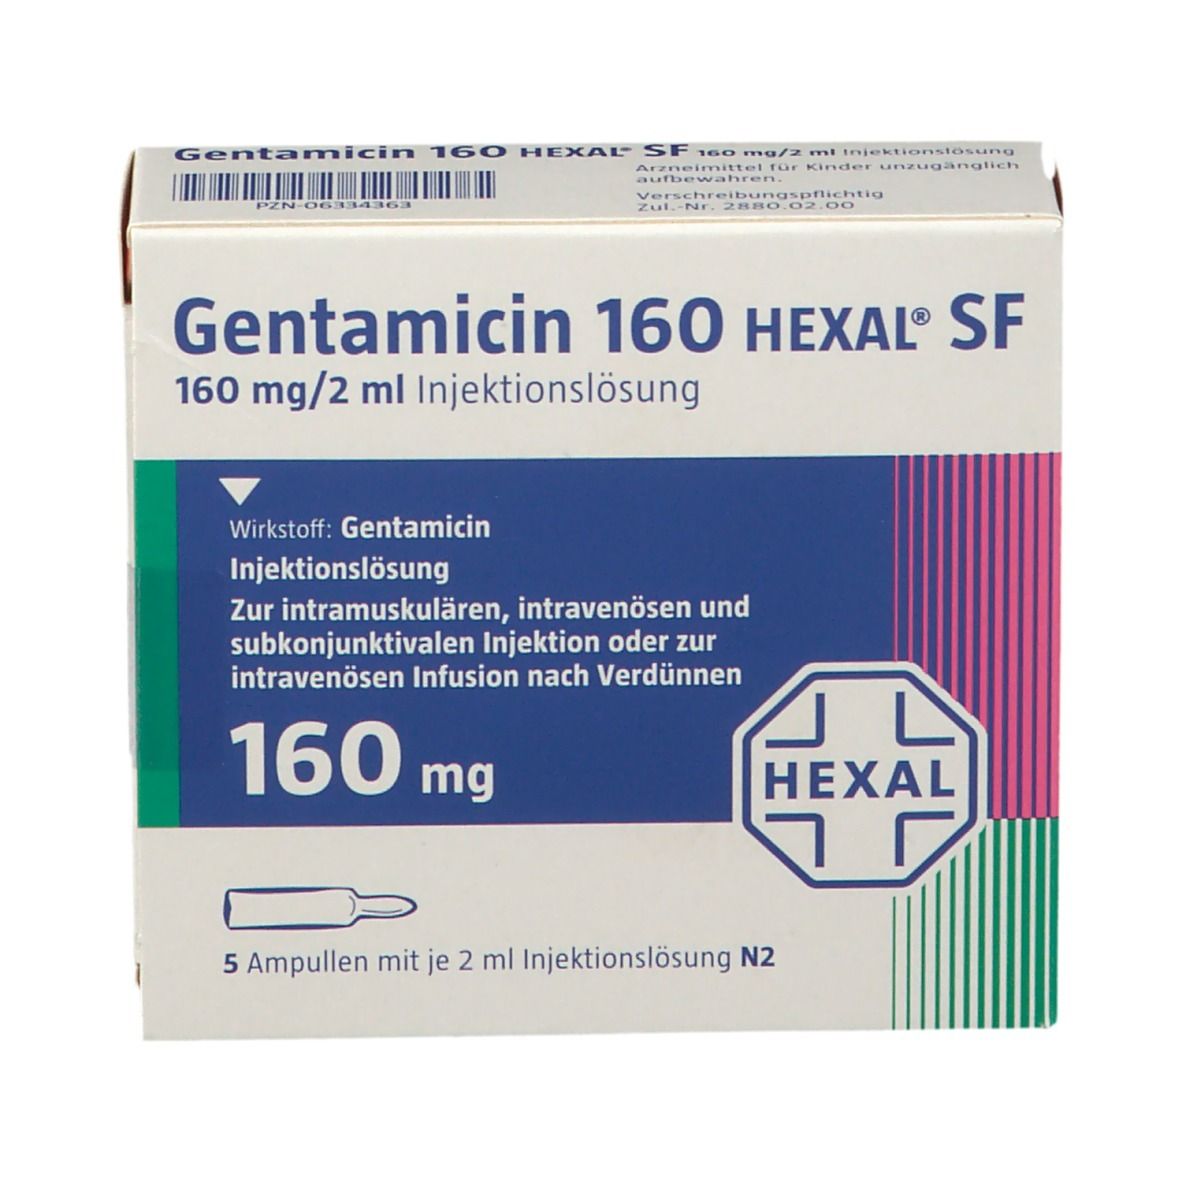 Gentamicin 160 HEXAL® SF